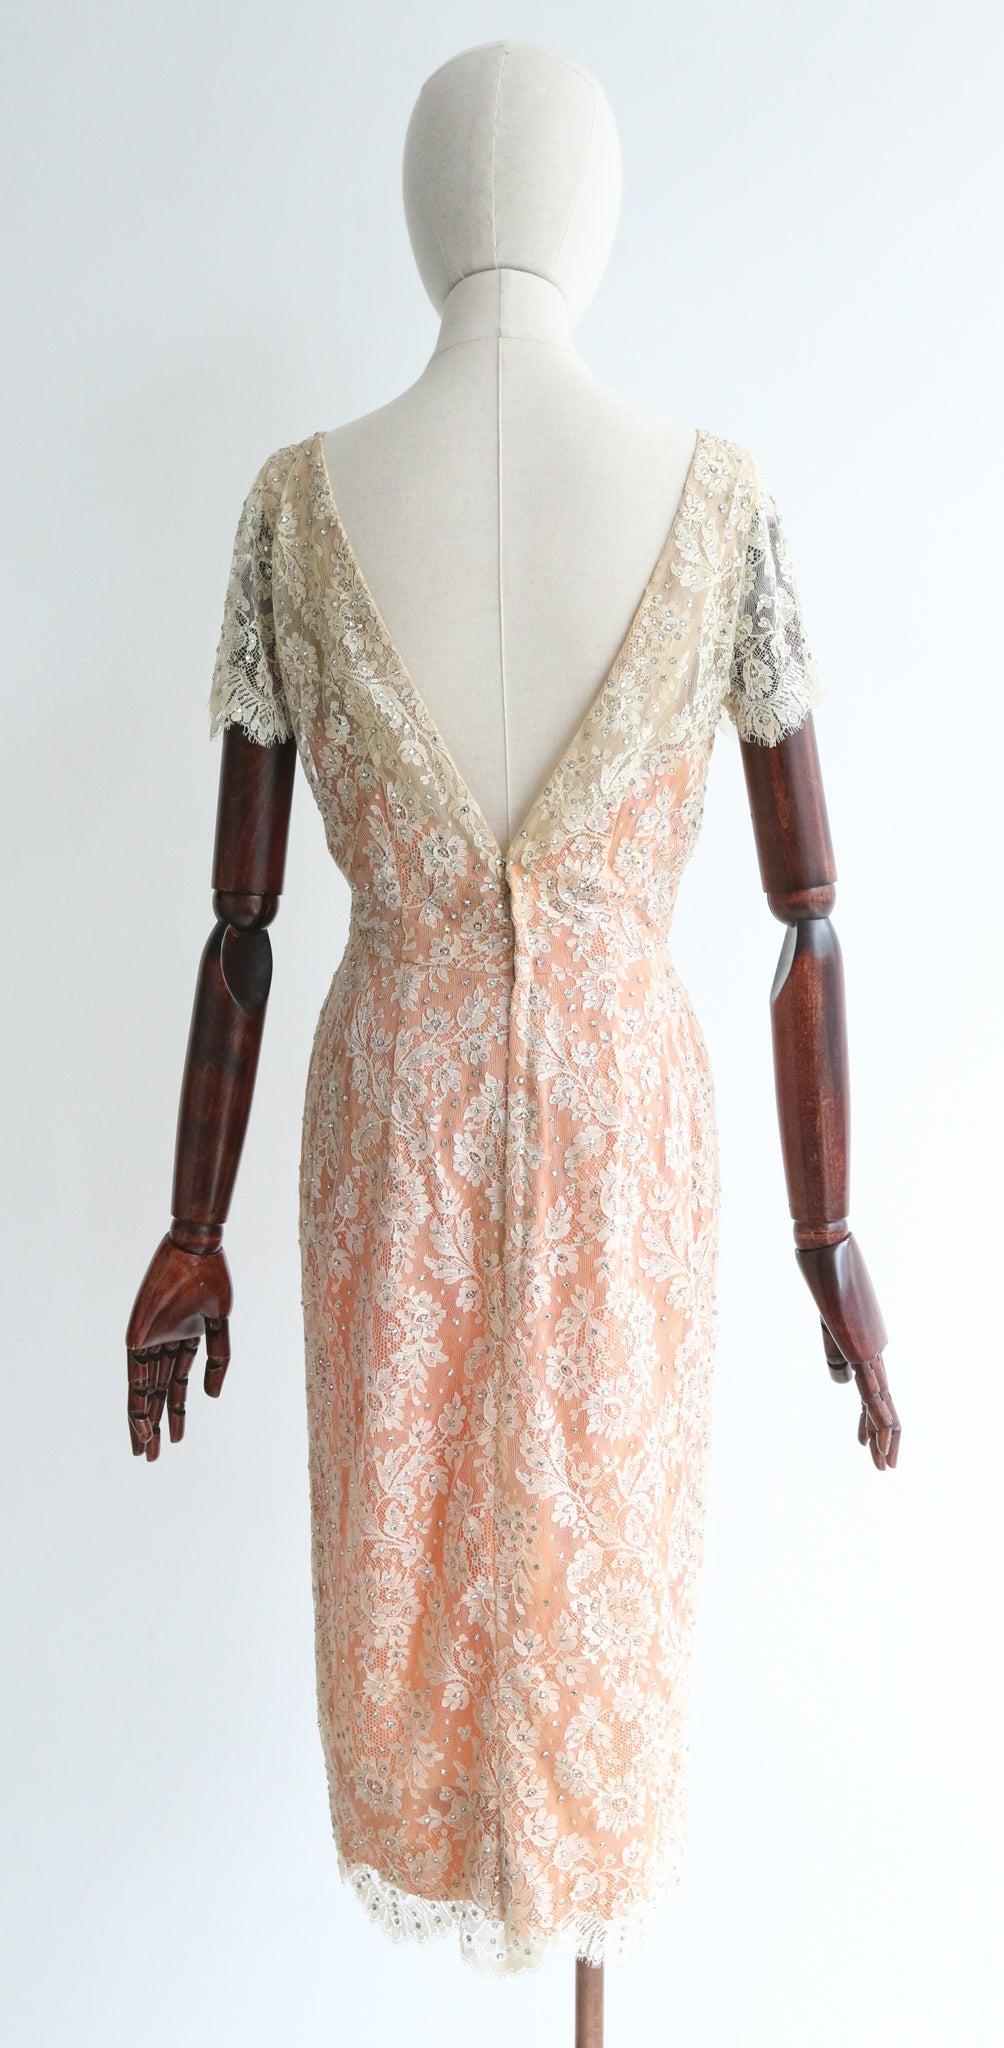 Women's Vintage 1950's Howard Greer Lace and Rhinestone Embellished Dress UK 8 US 4 For Sale